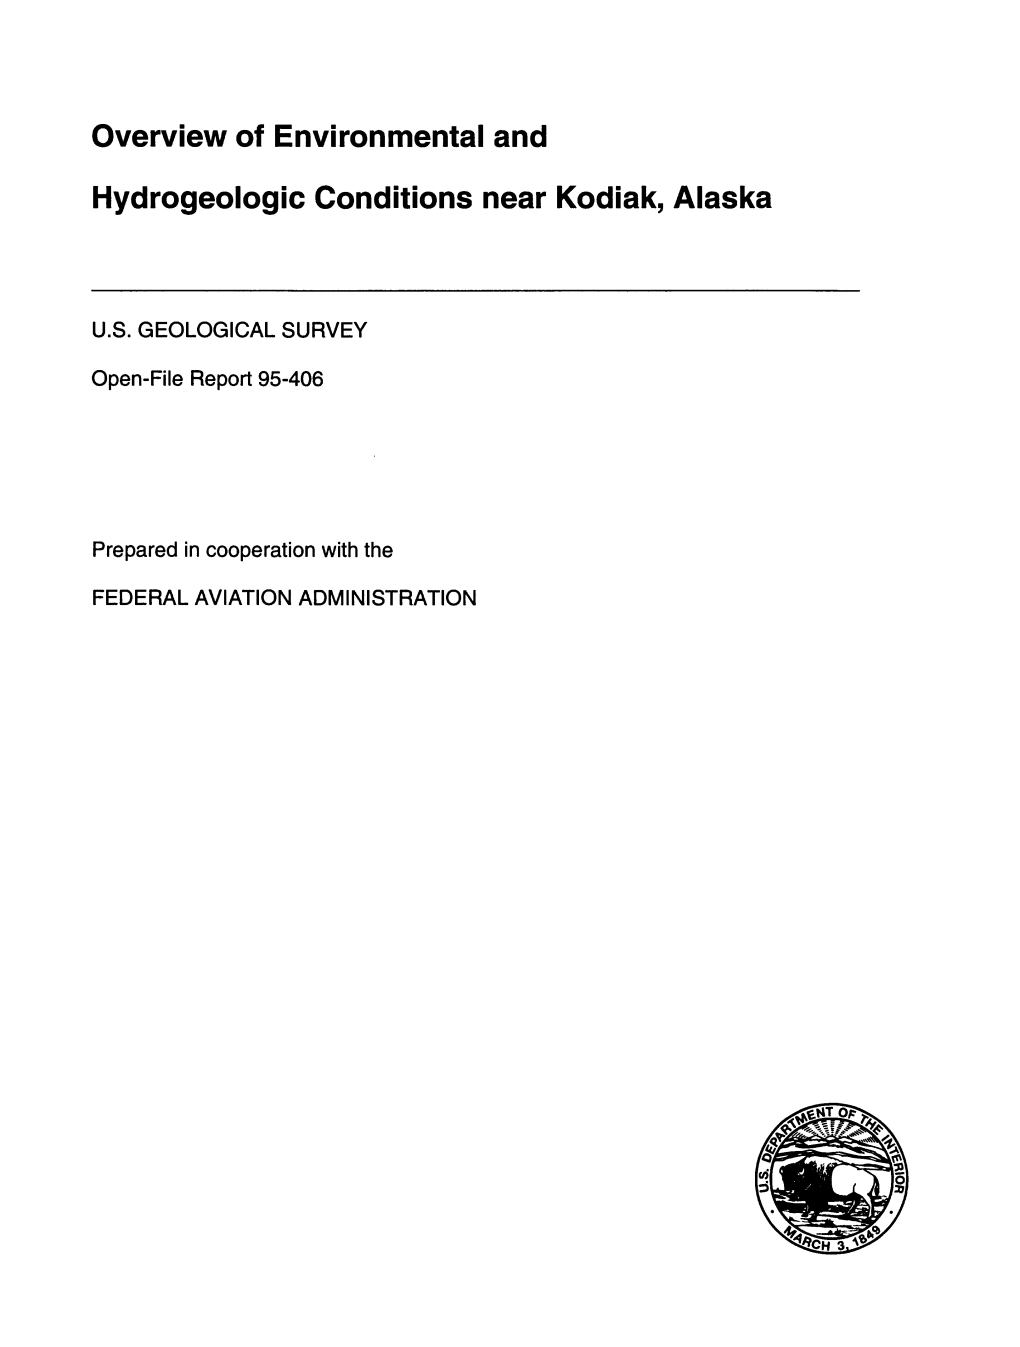 Overview of Environmental and Hydrogeologic Conditions Near Kodiak, Alaska